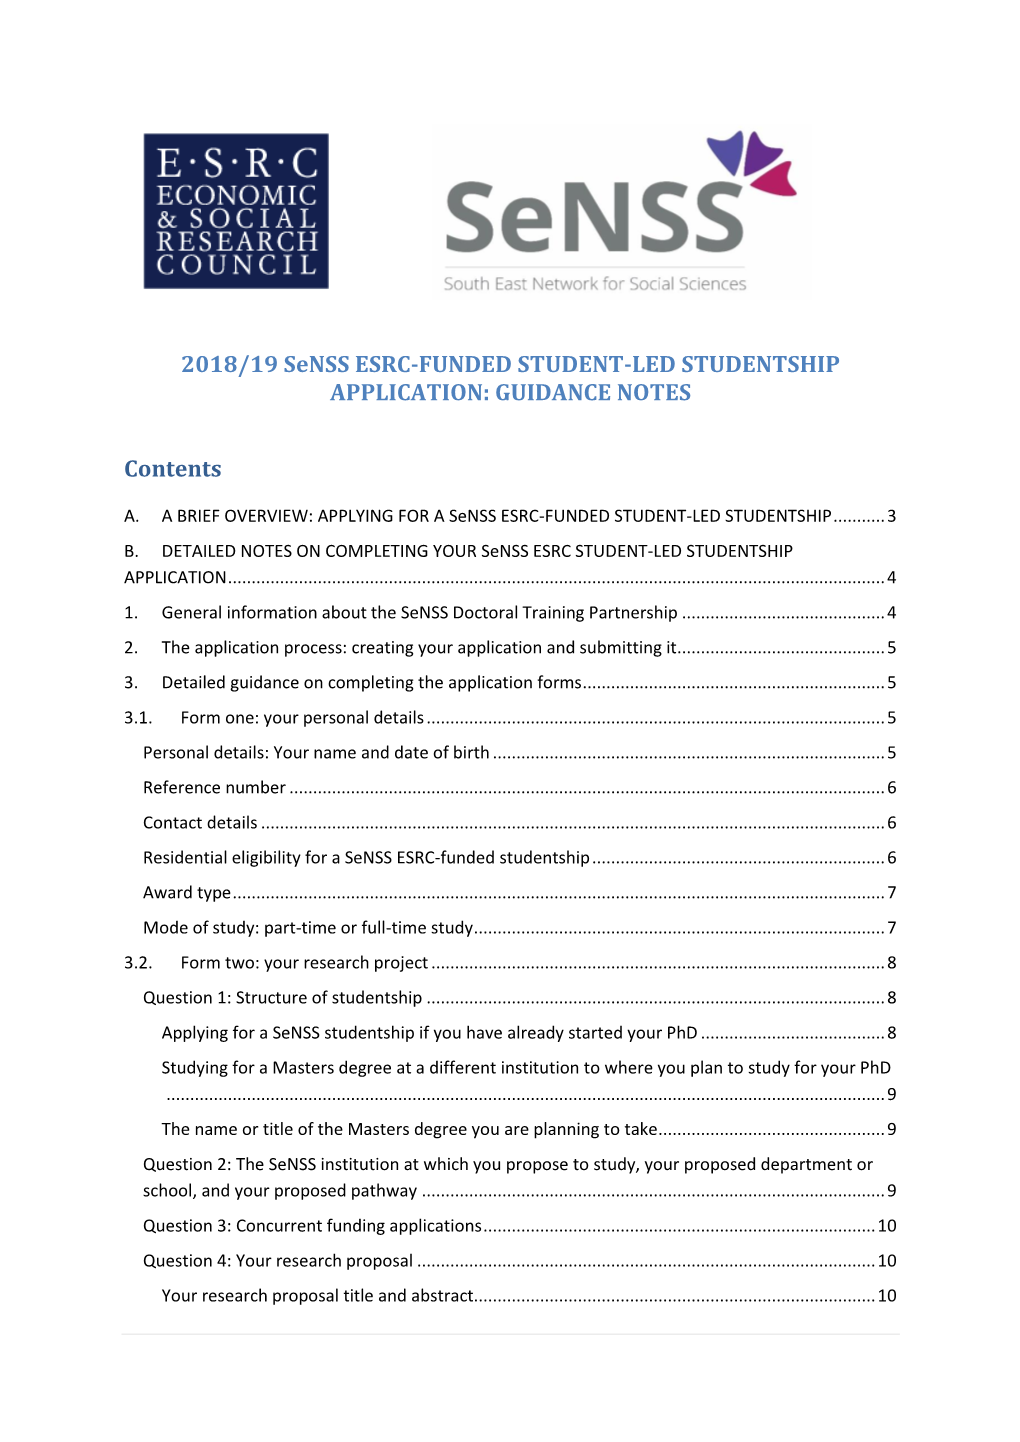 2018/19 Senss ESRC-FUNDED STUDENT-LED STUDENTSHIP APPLICATION: GUIDANCE NOTES